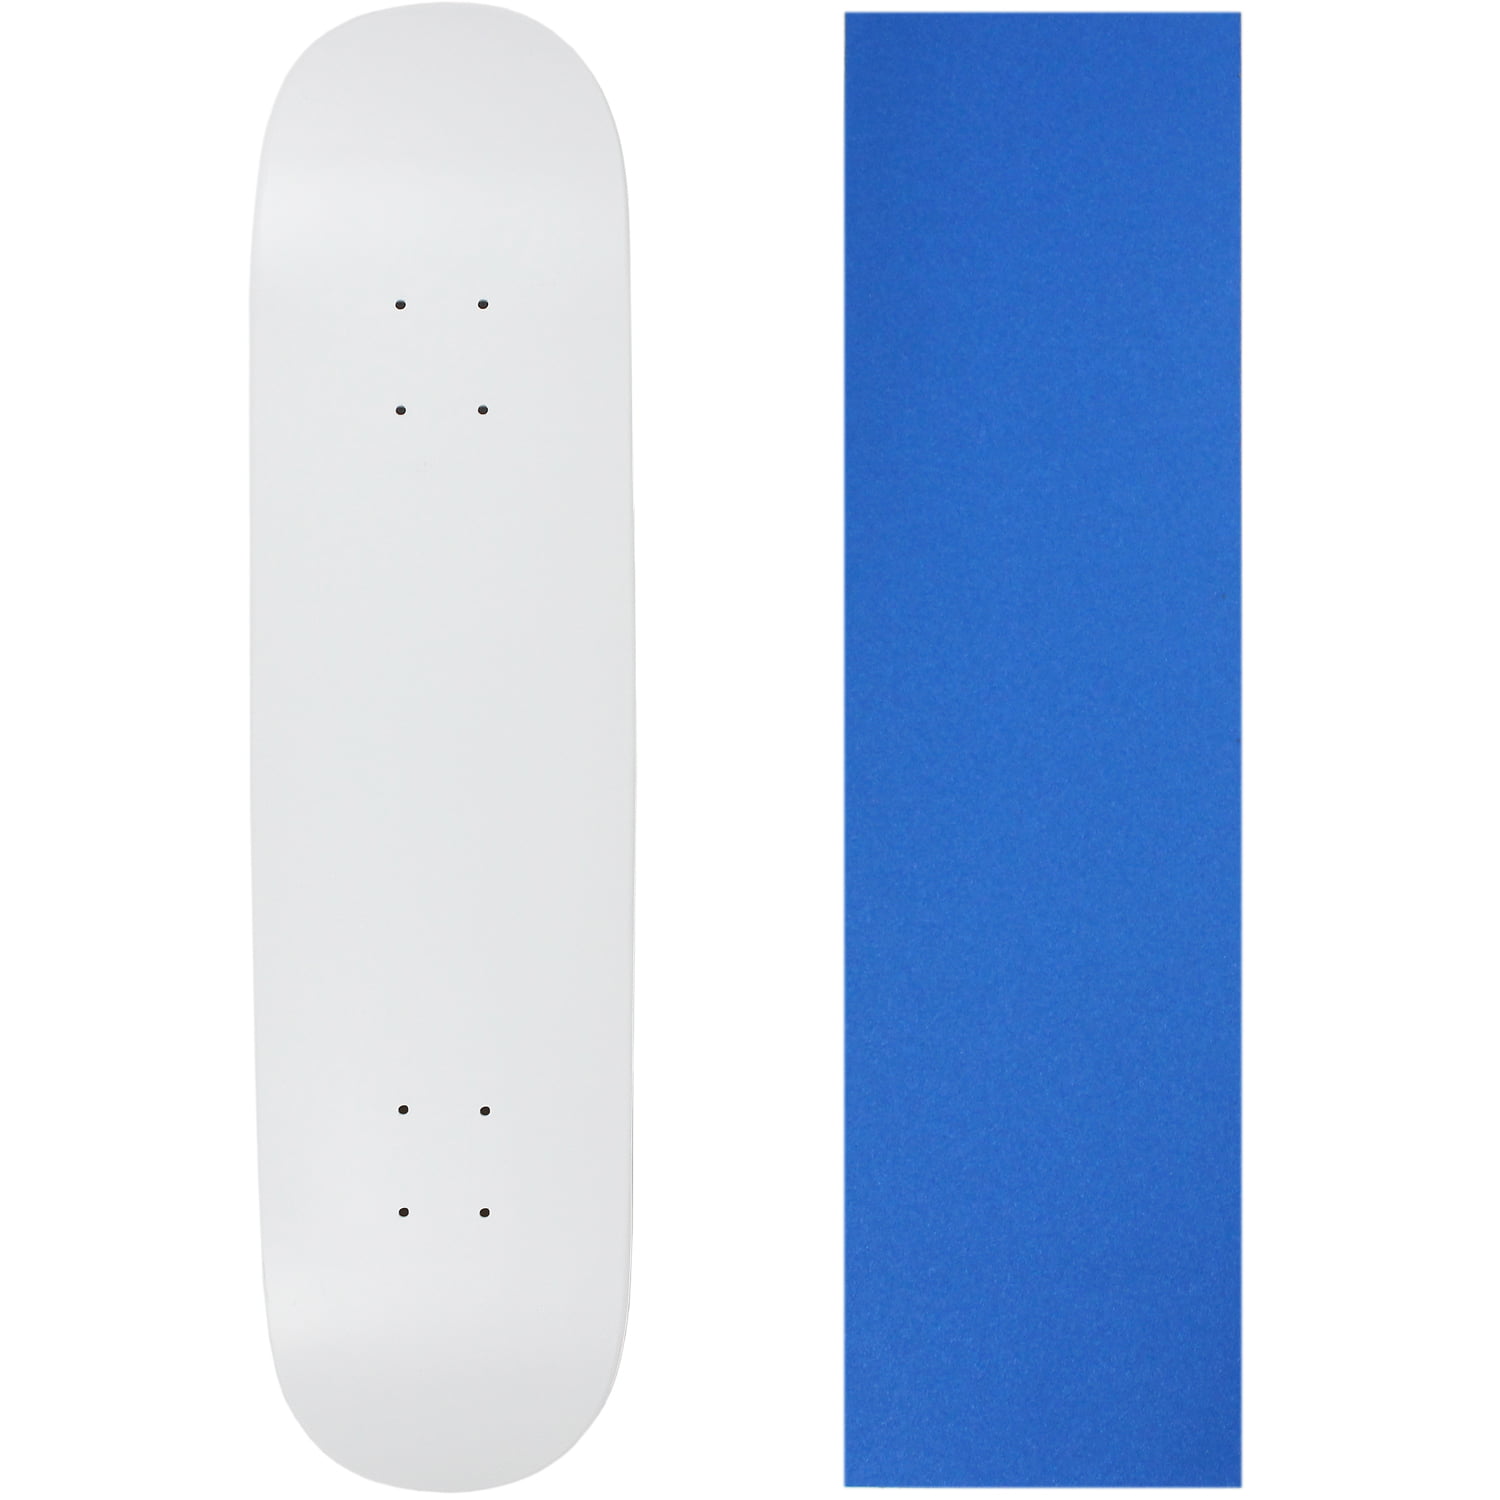 MOOSE Blank SKATEBOARD DECK 8.5' DPD WHITE Skateboards With Black Diamond Grip 